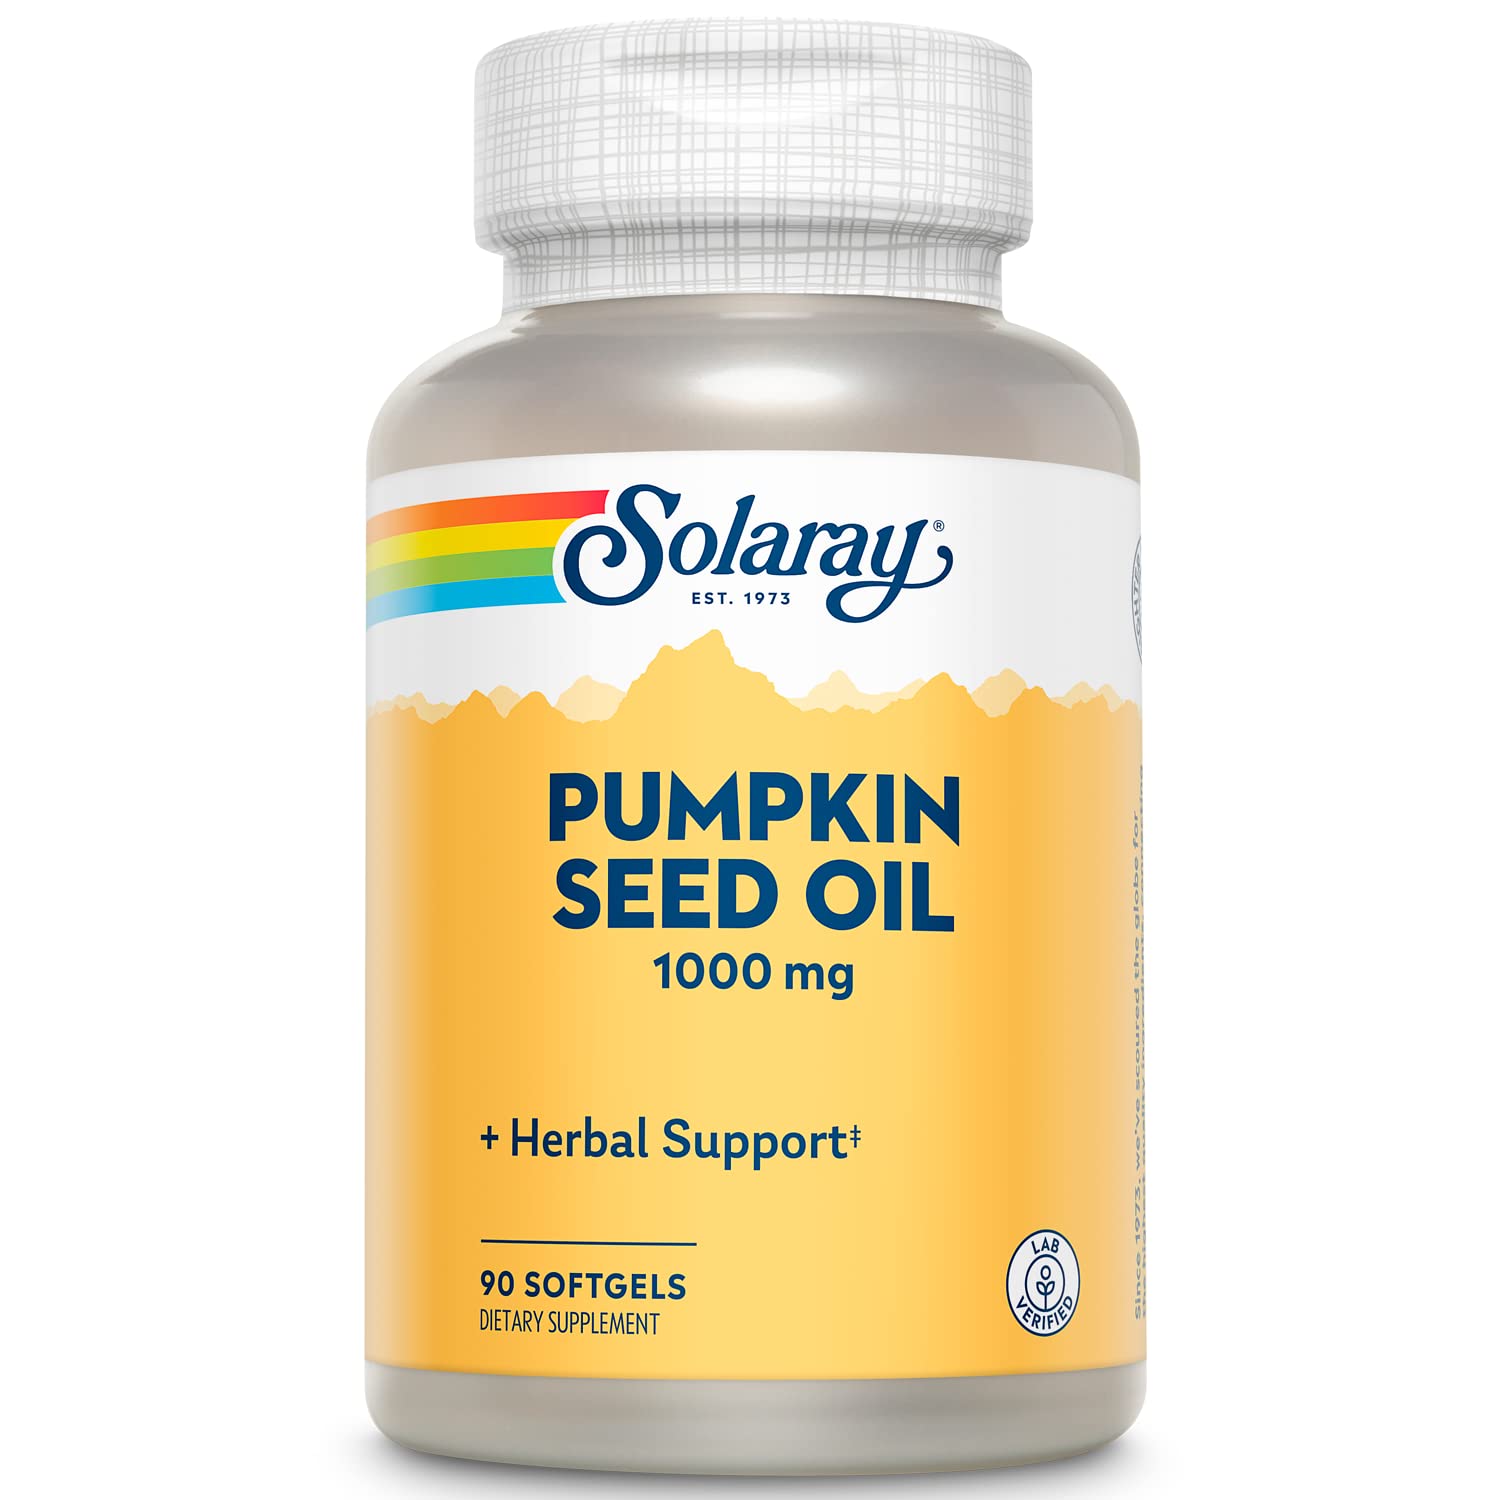 Solaray Pumpkin Seed Oil, 1000 mg, 90 Count